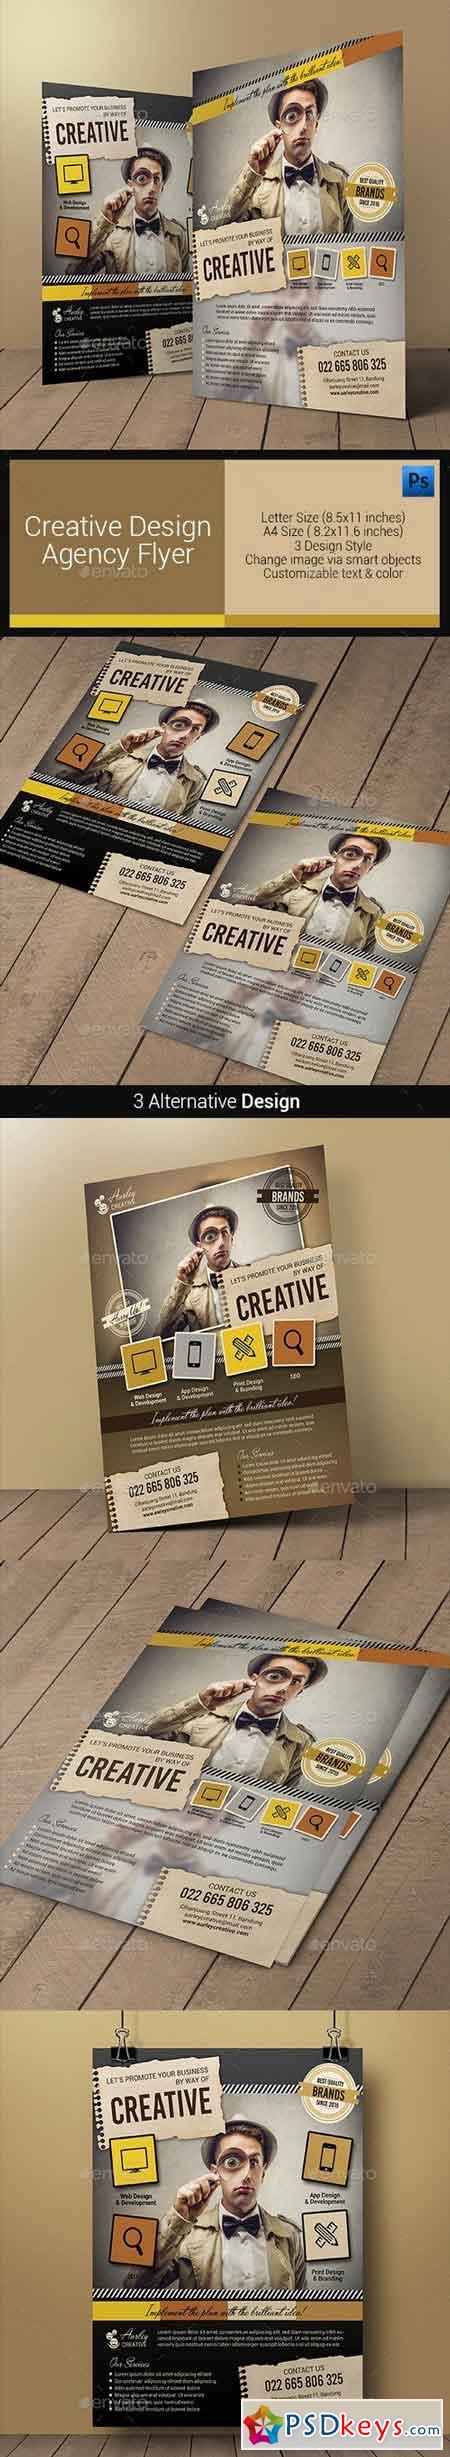 Creative Design Agency Flyers 10880677